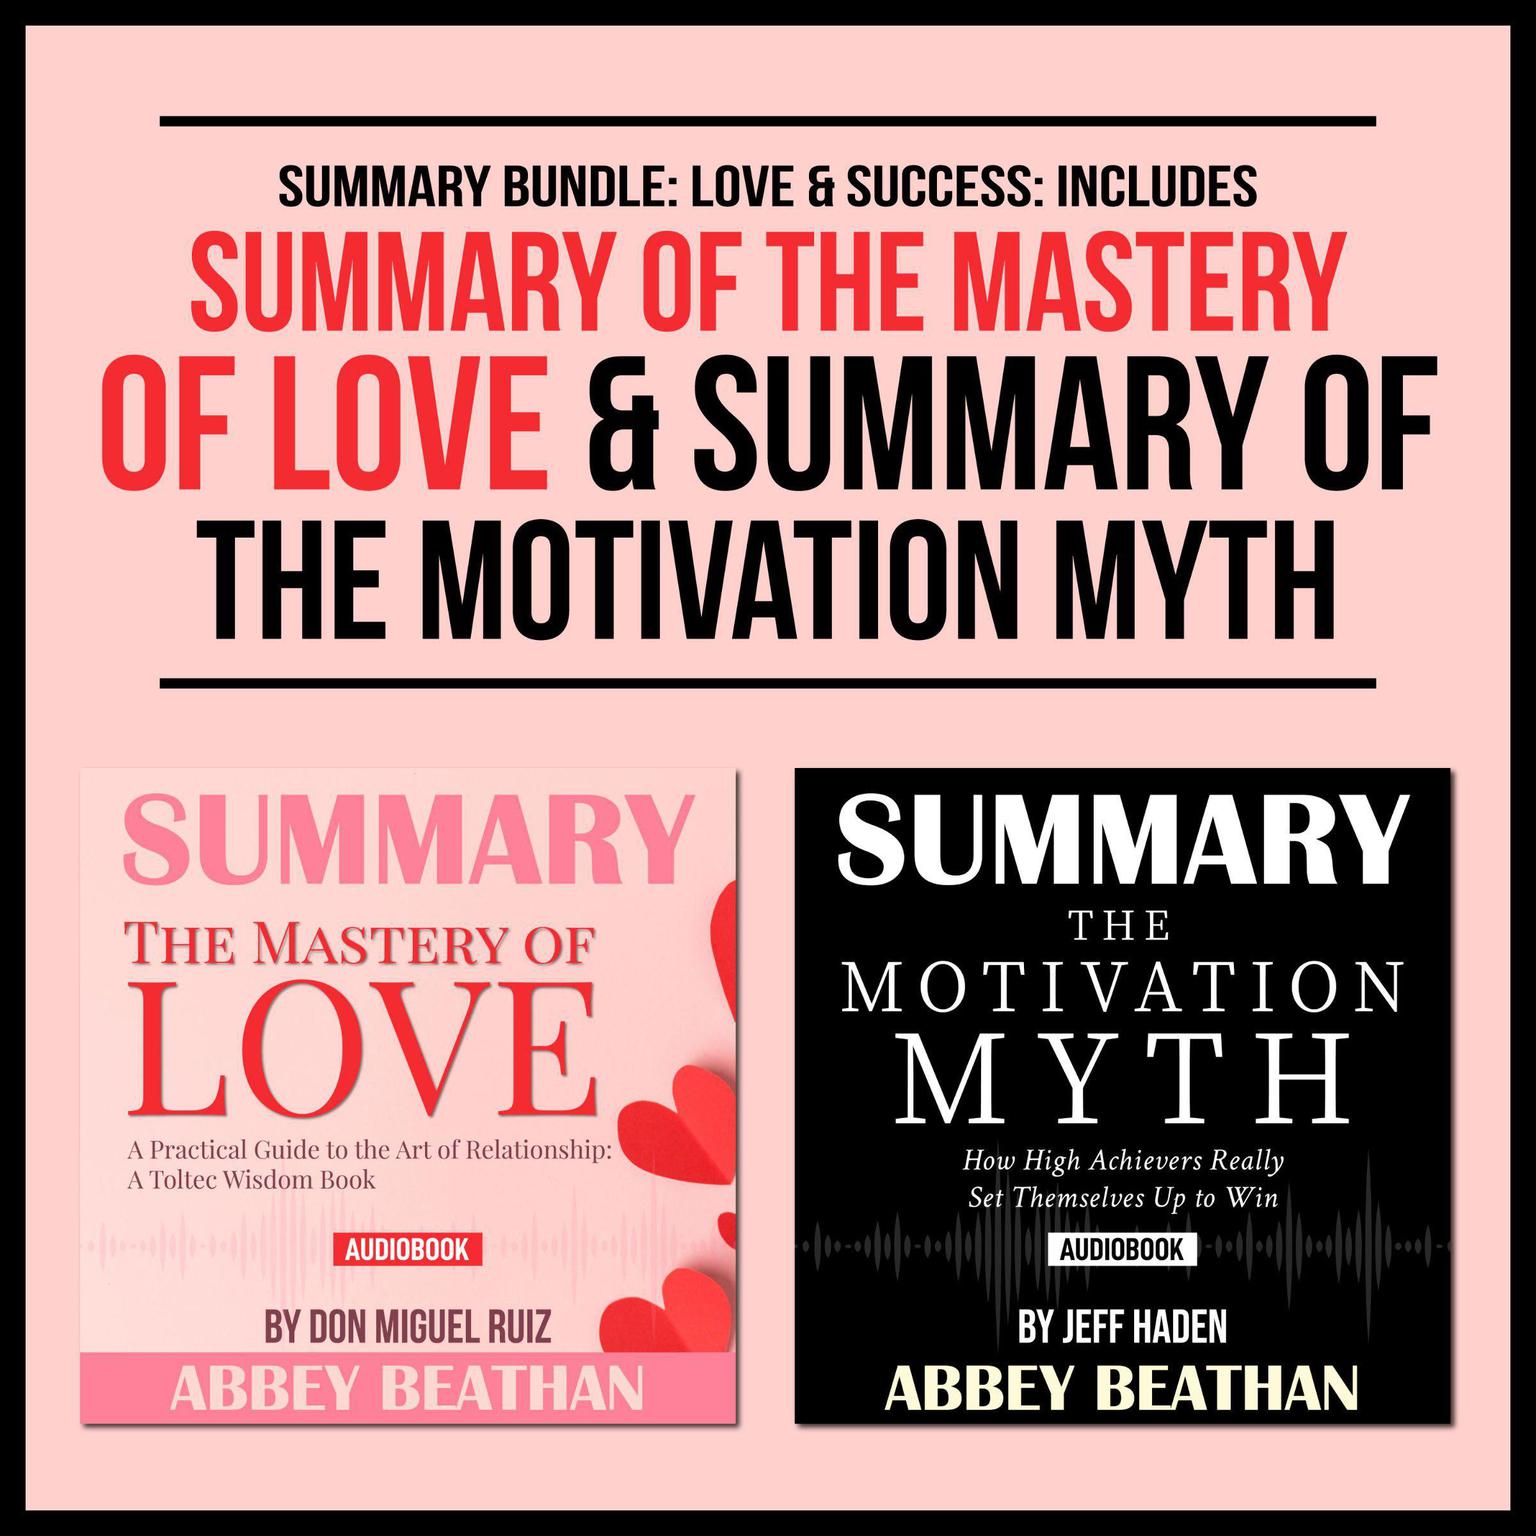 Summary Bundle: Love & Success: Includes Summary of The Mastery of Love & Summary of The Motivation Myth Audiobook, by Abbey Beathan